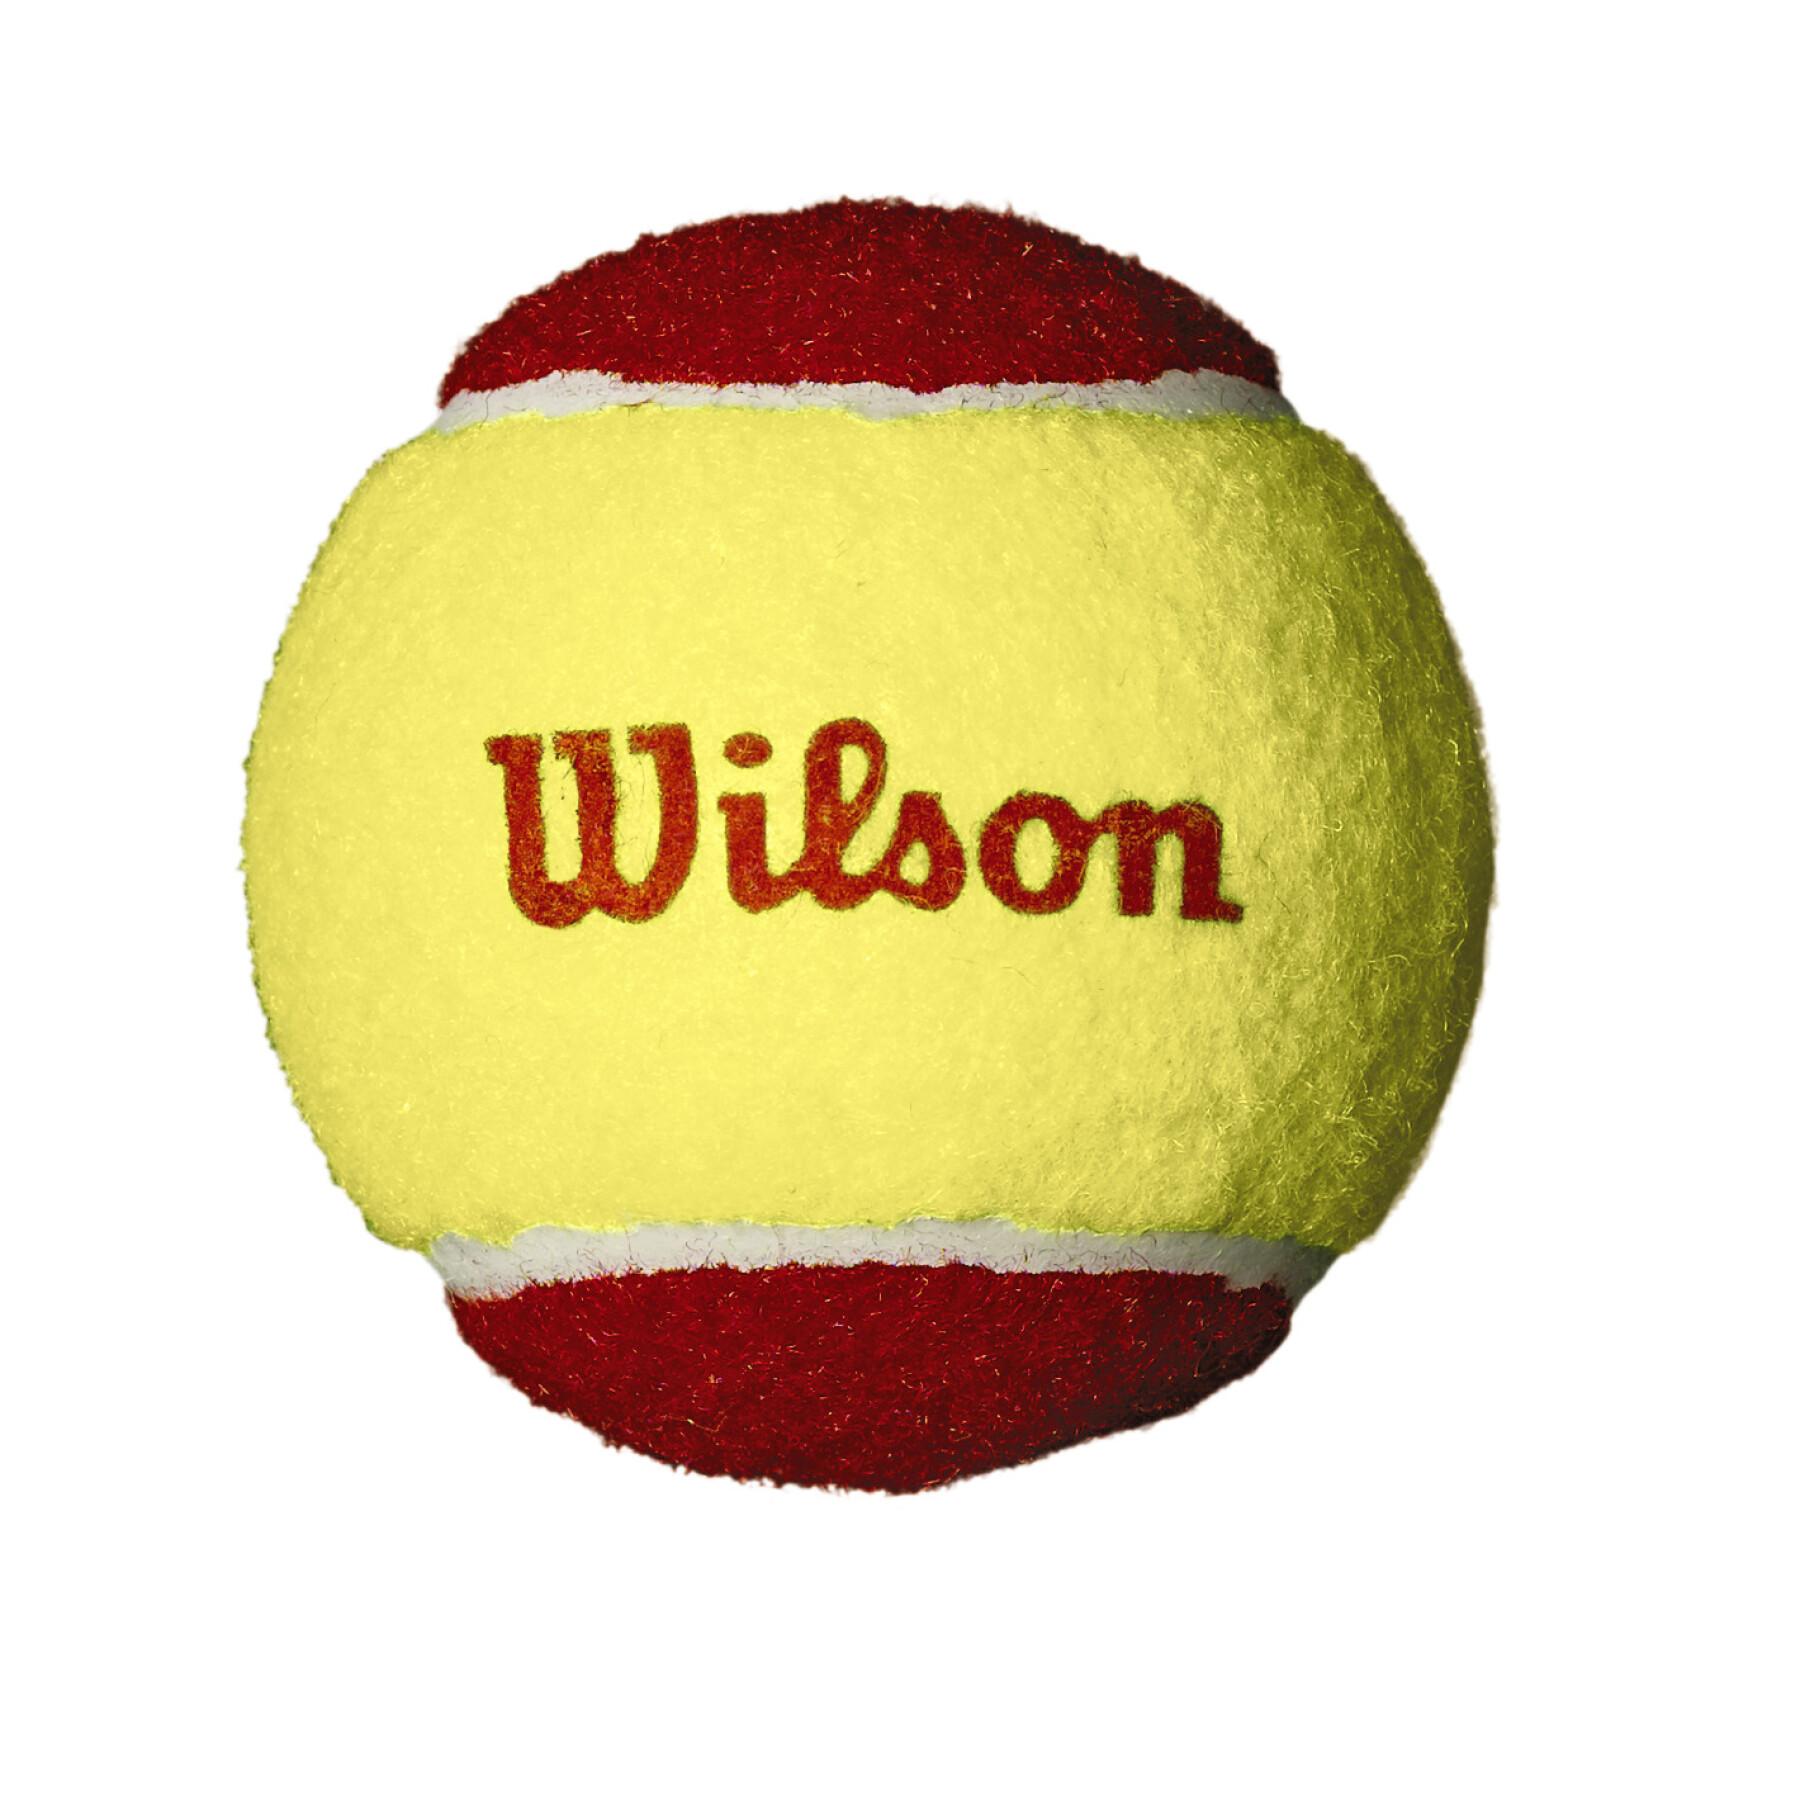 Lot of 12 tennis balls Wilson Starter